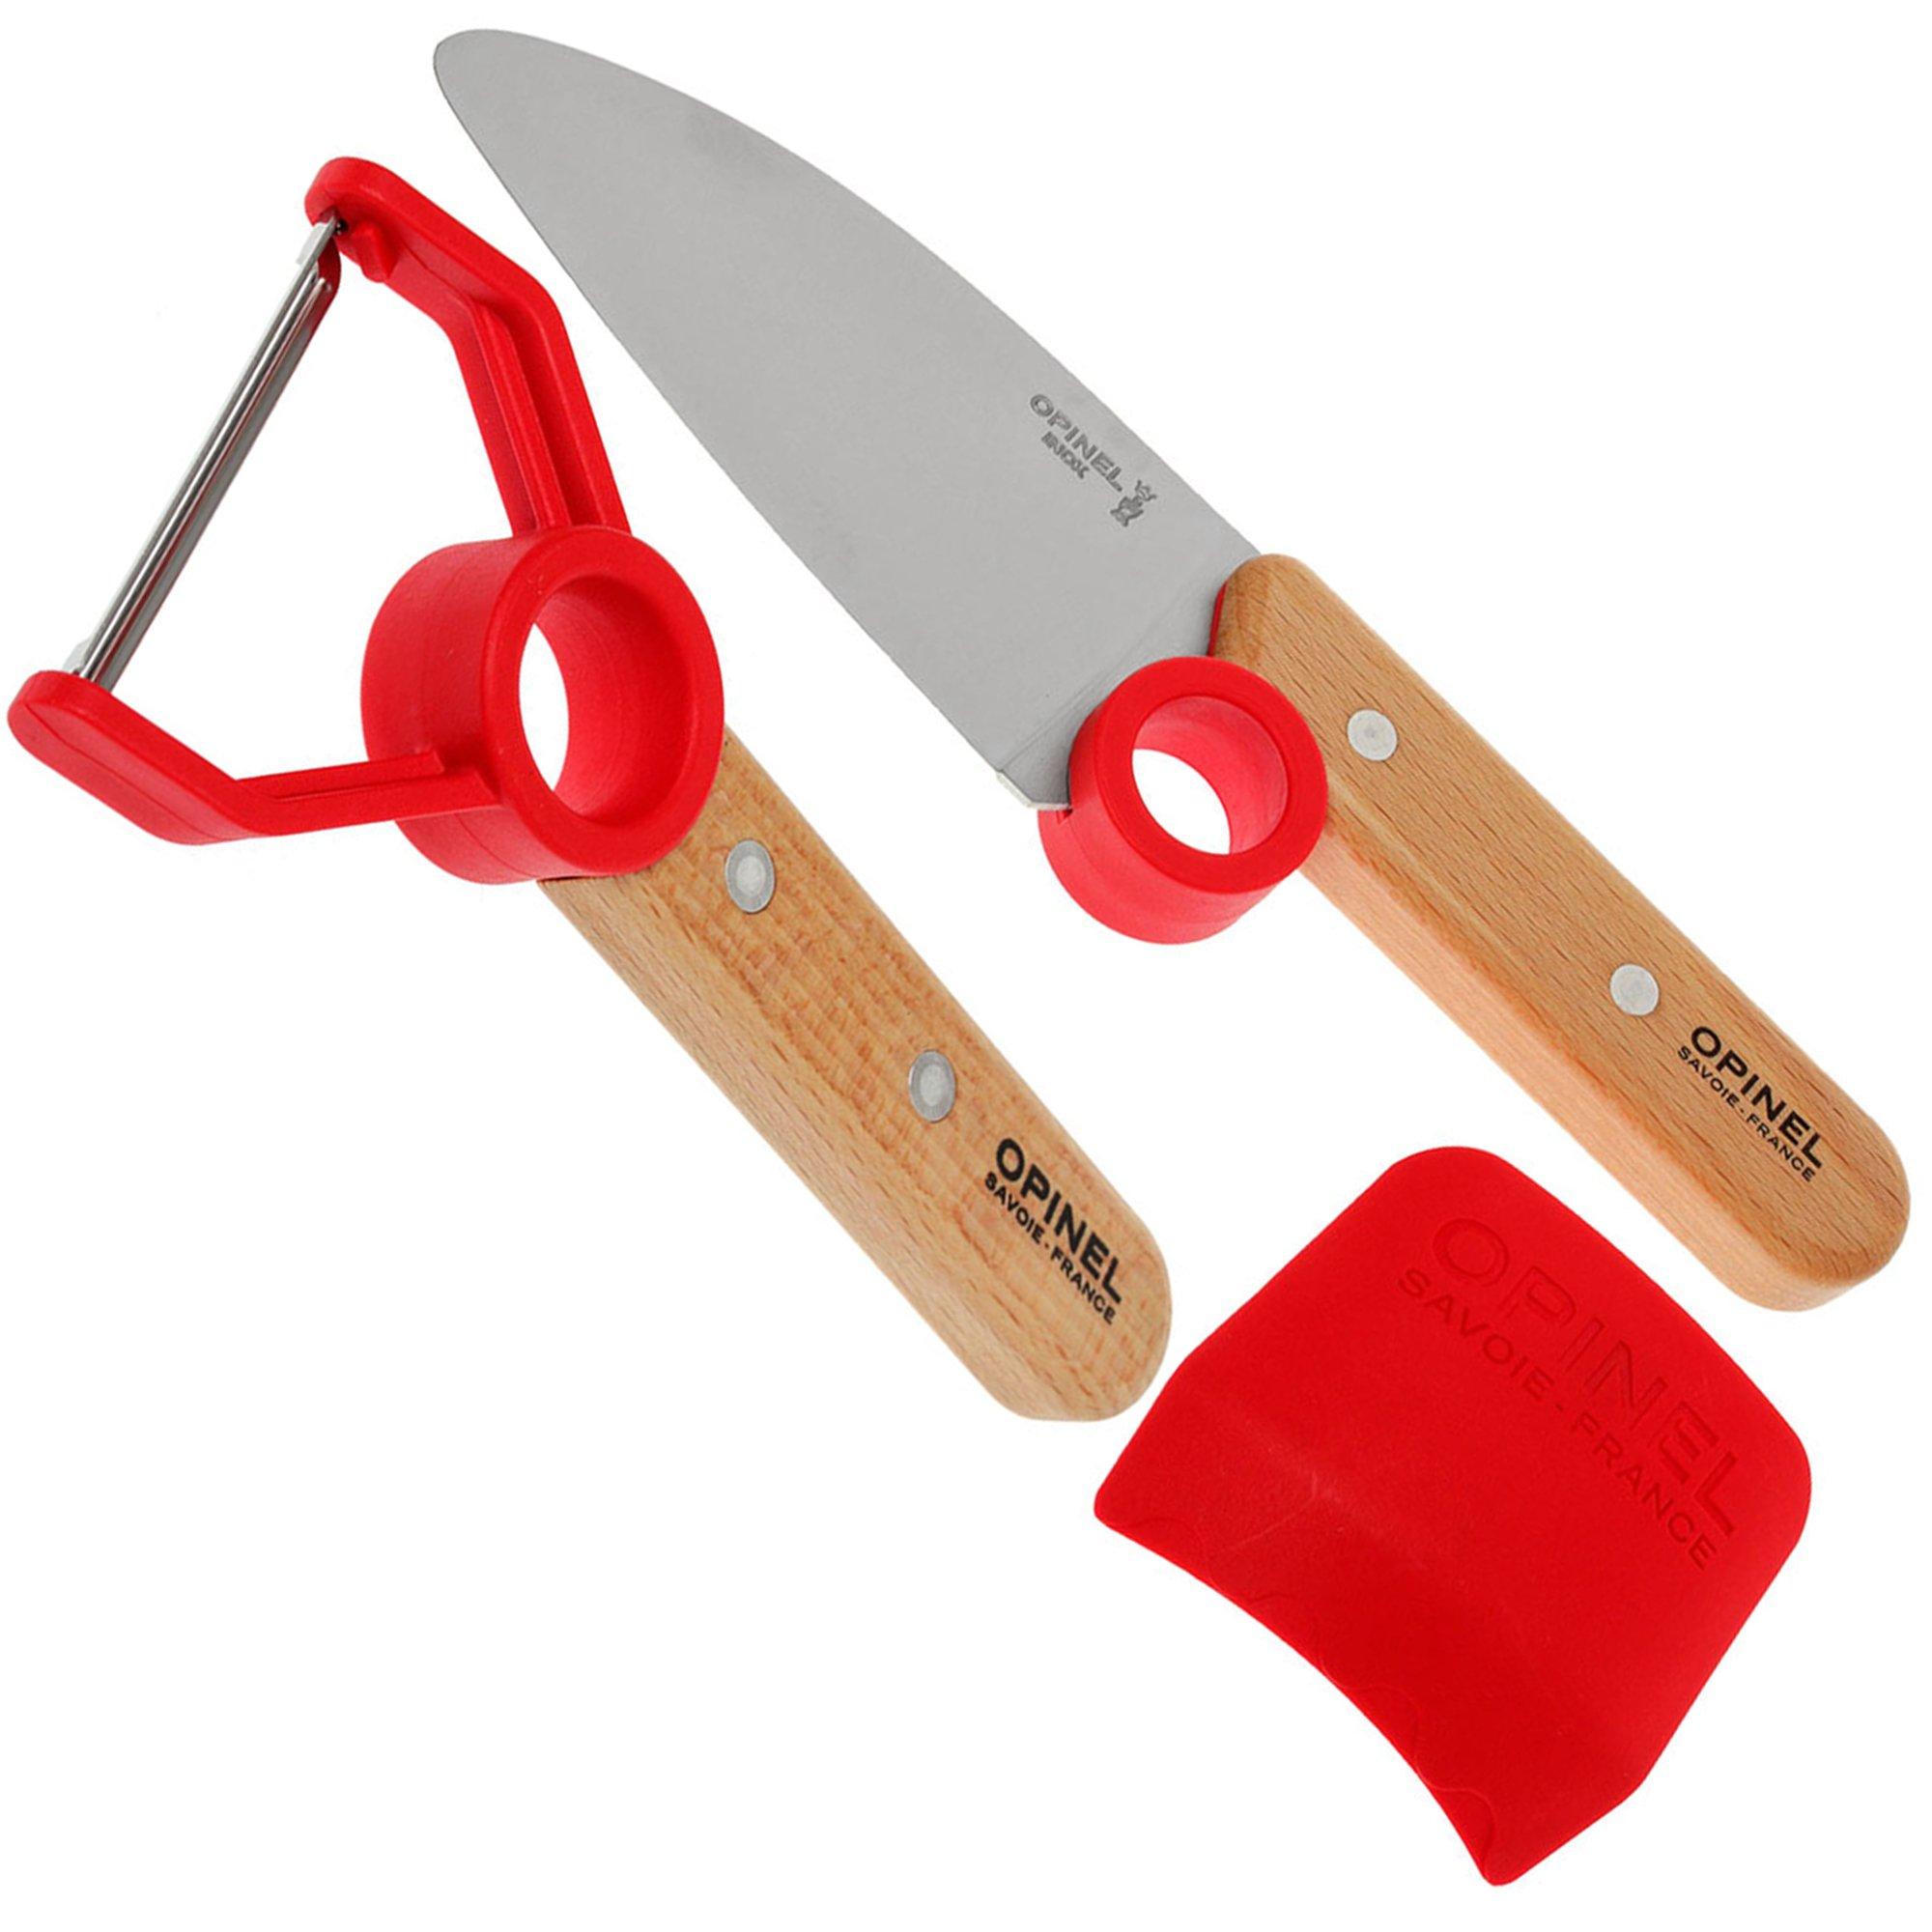 Opinel Le Petit Chef Knife Set